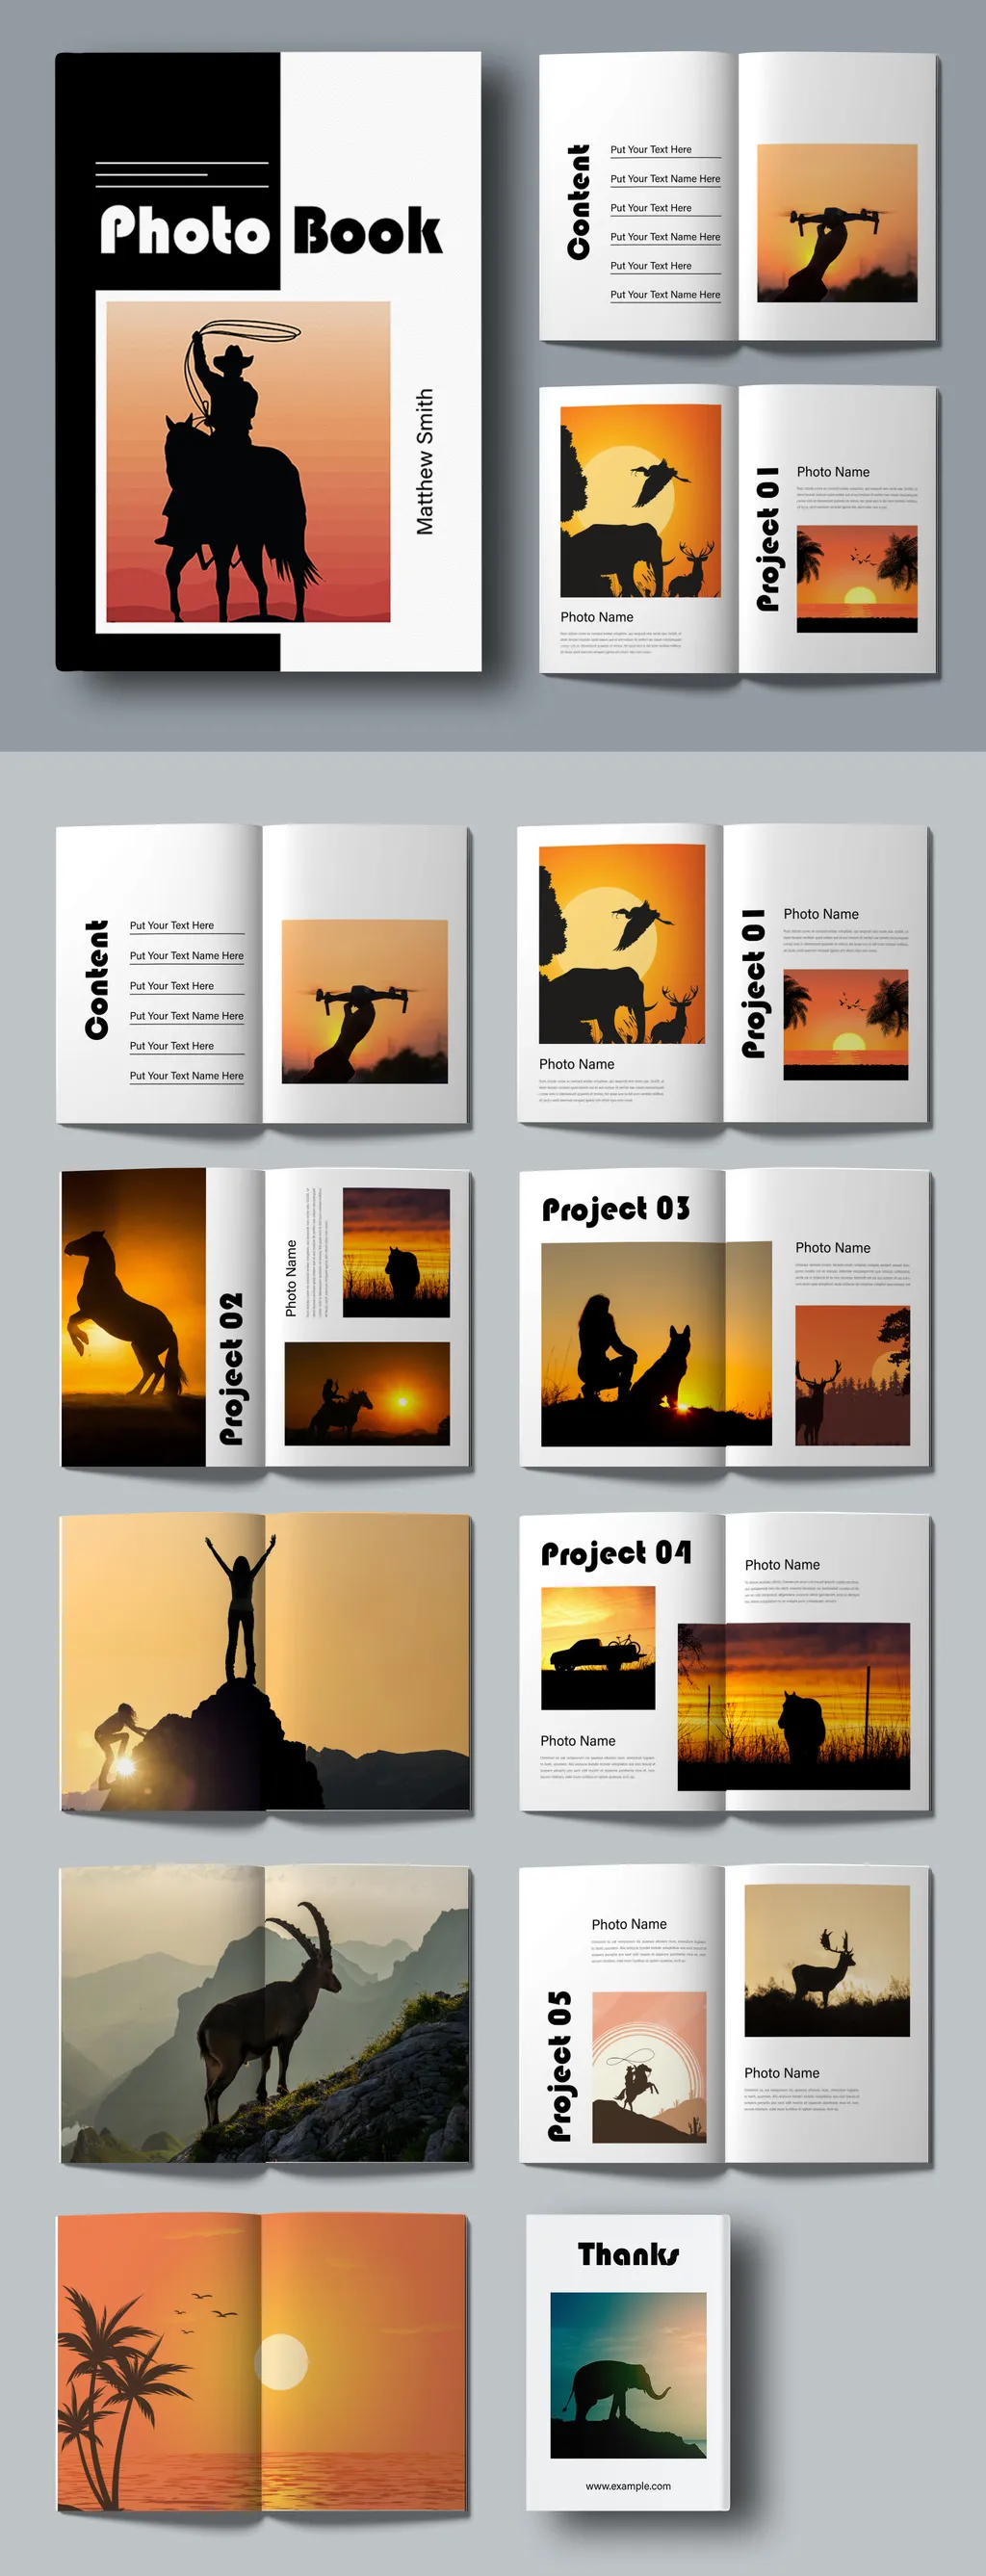 Adobestock - Photo Book Layout 718538382